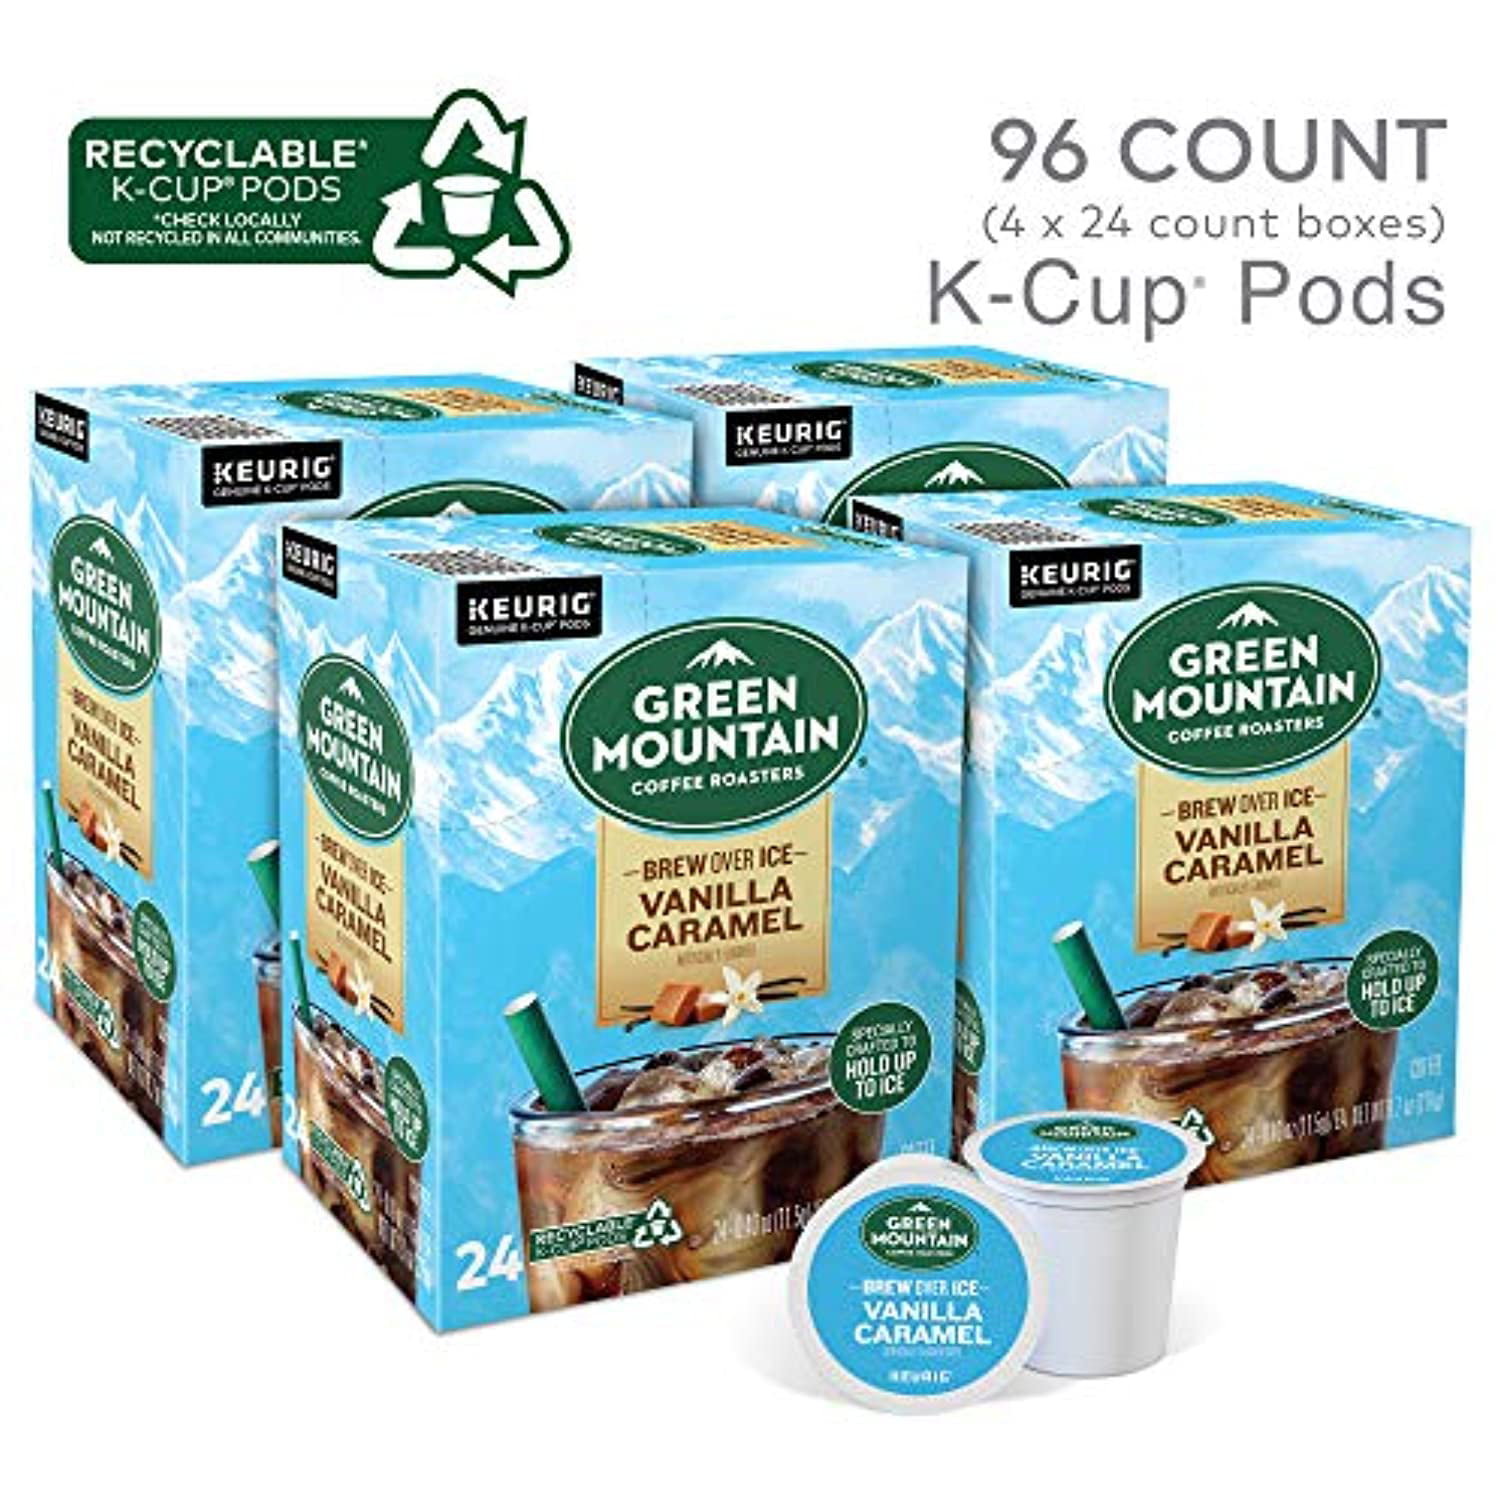 Keurig K-Cup Brew Over Ice Vanilla Caramel Coffee K-Cup ® Box 24 ct. -  Coffee Rocket